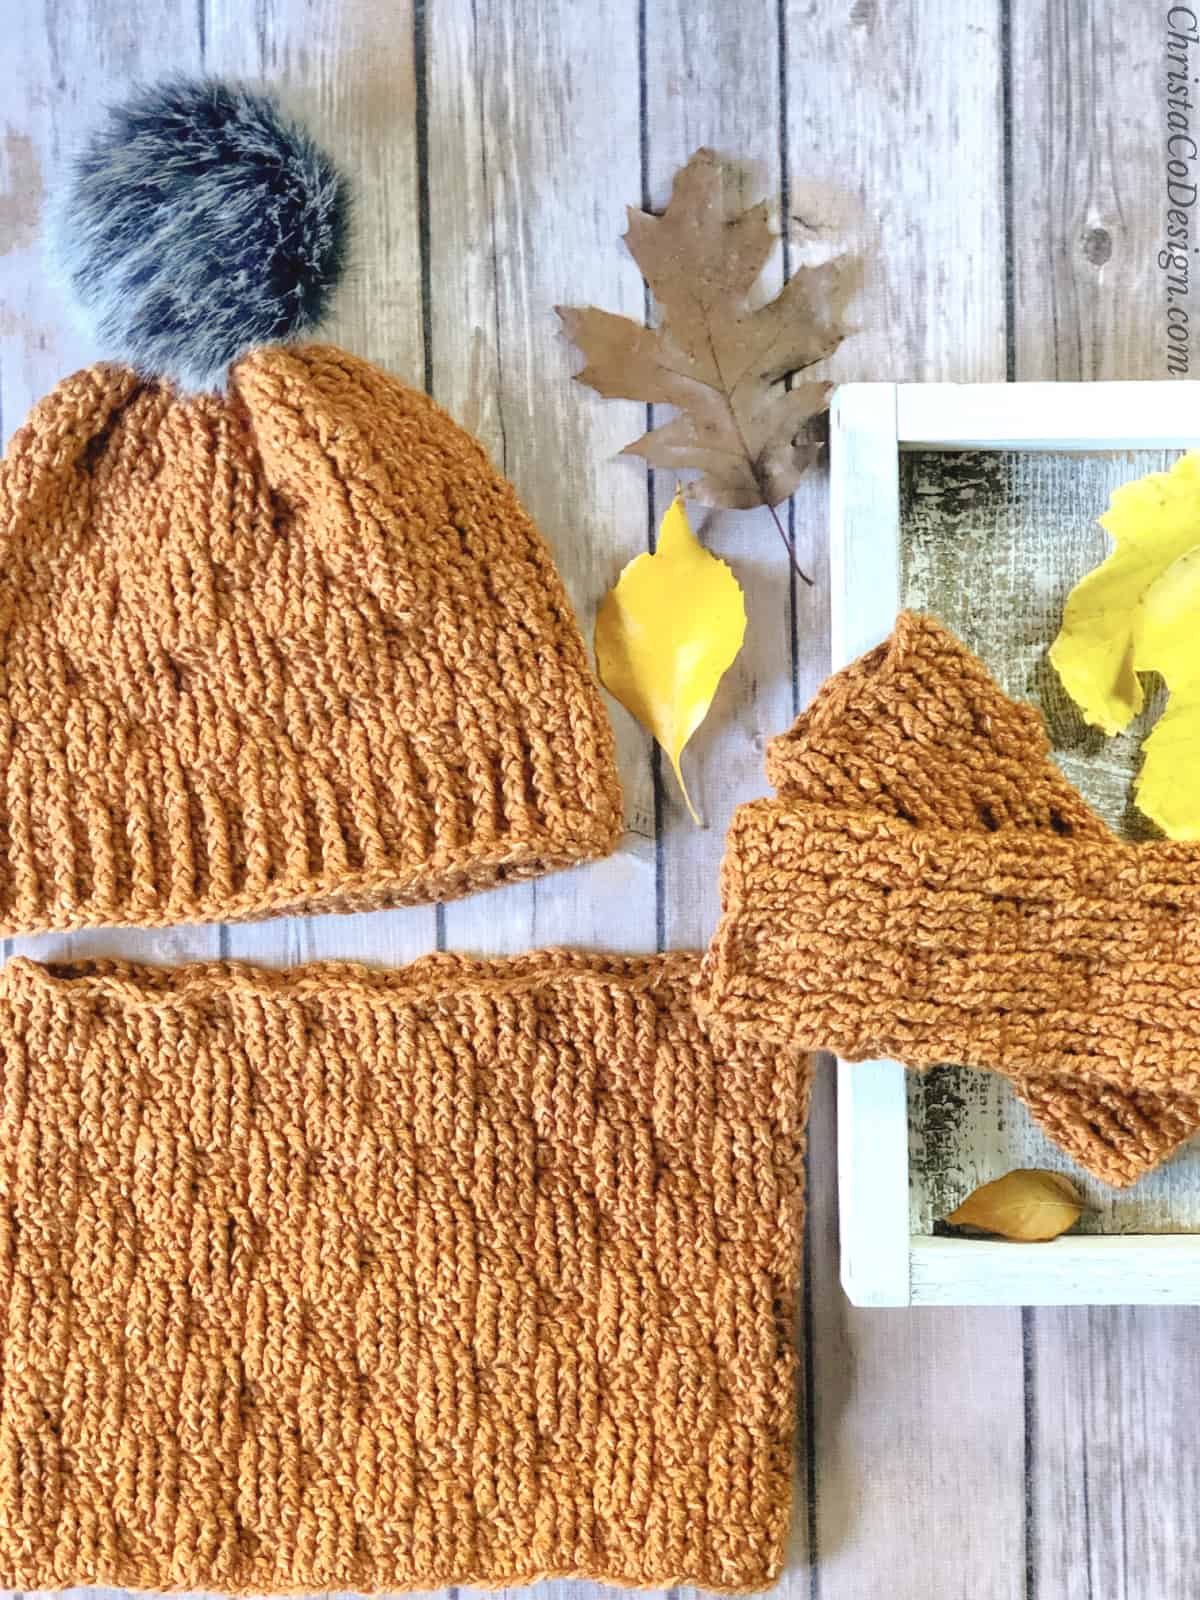 Crochet hat, fingerless gloves and cowl free crochet pattern in rust yarn on wood back ground.